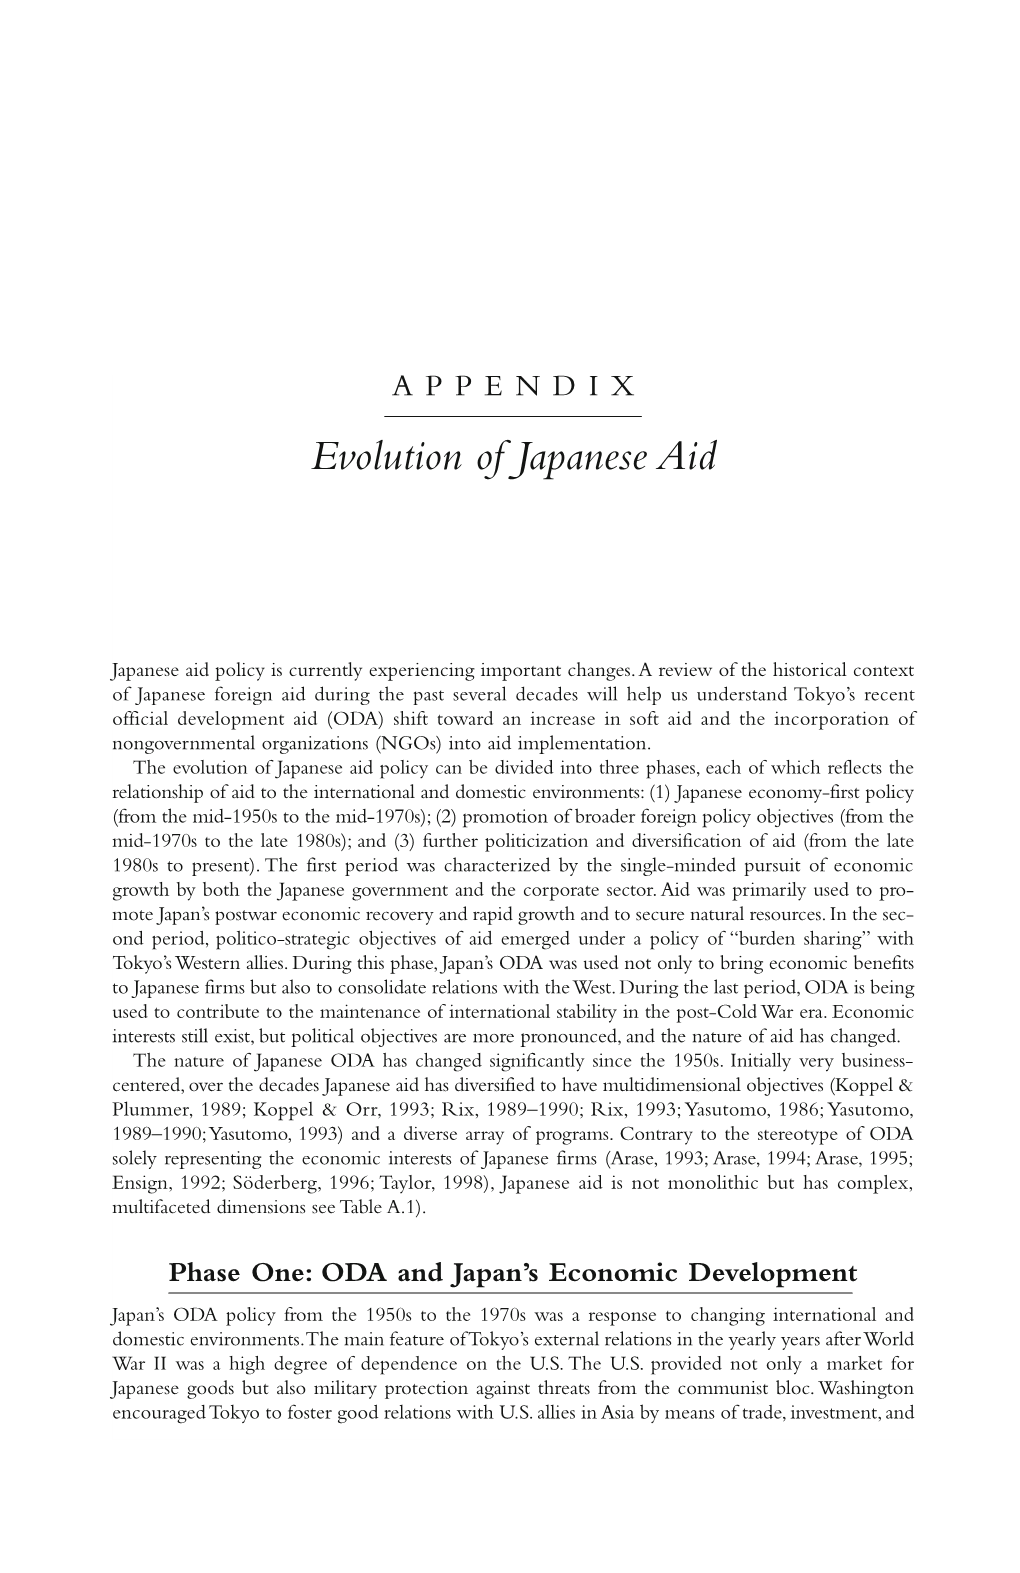 Evolution of Japanese Aid